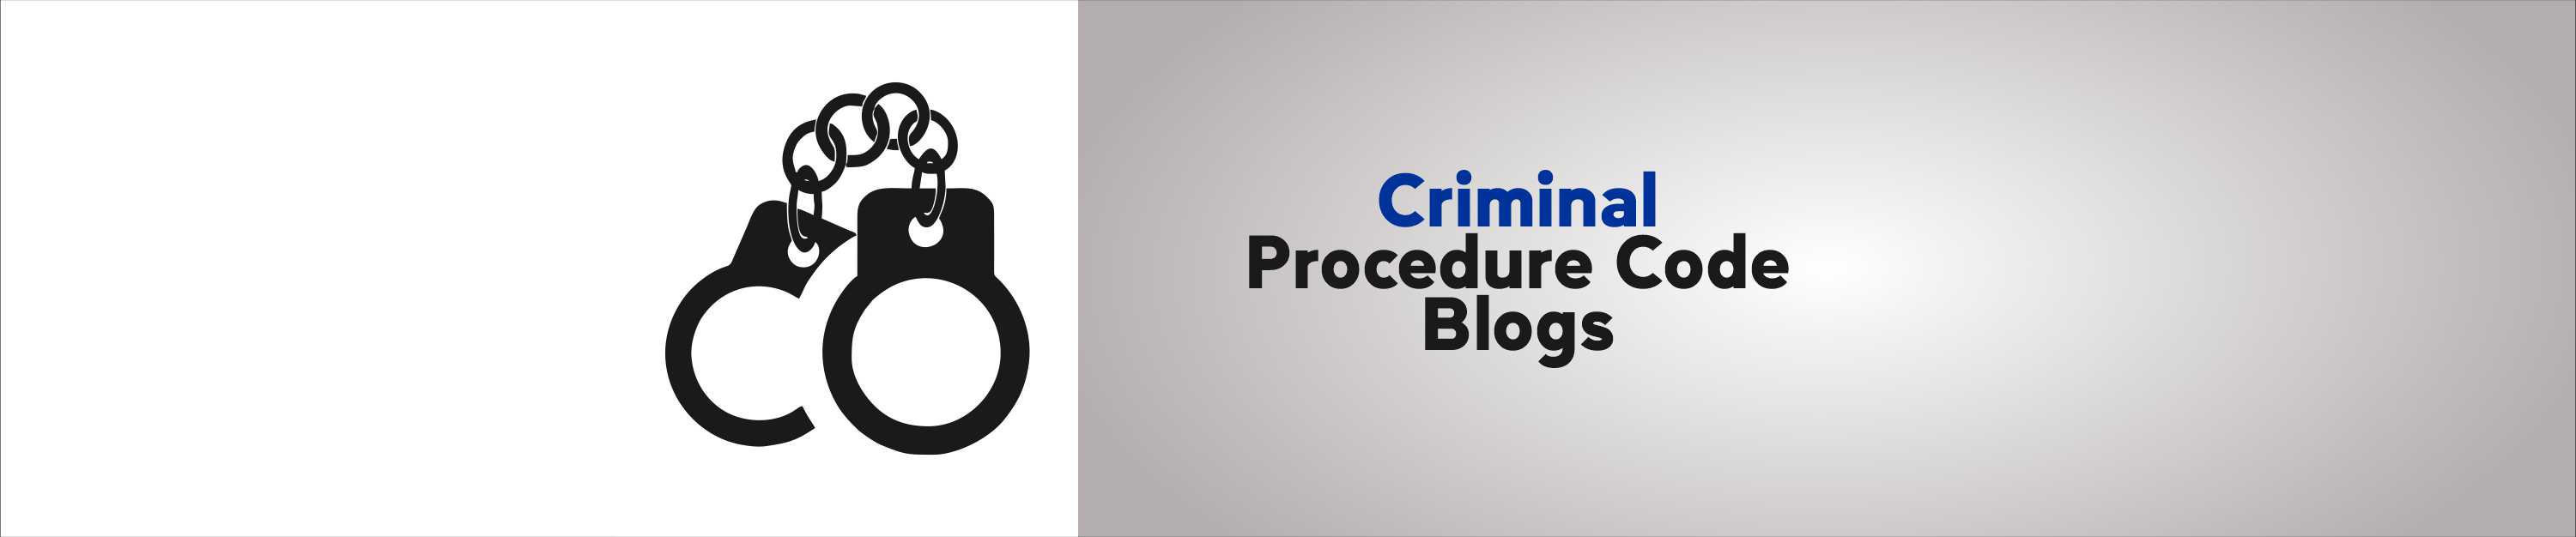 CRIMINAL PROCEDURE CODE BLOGS